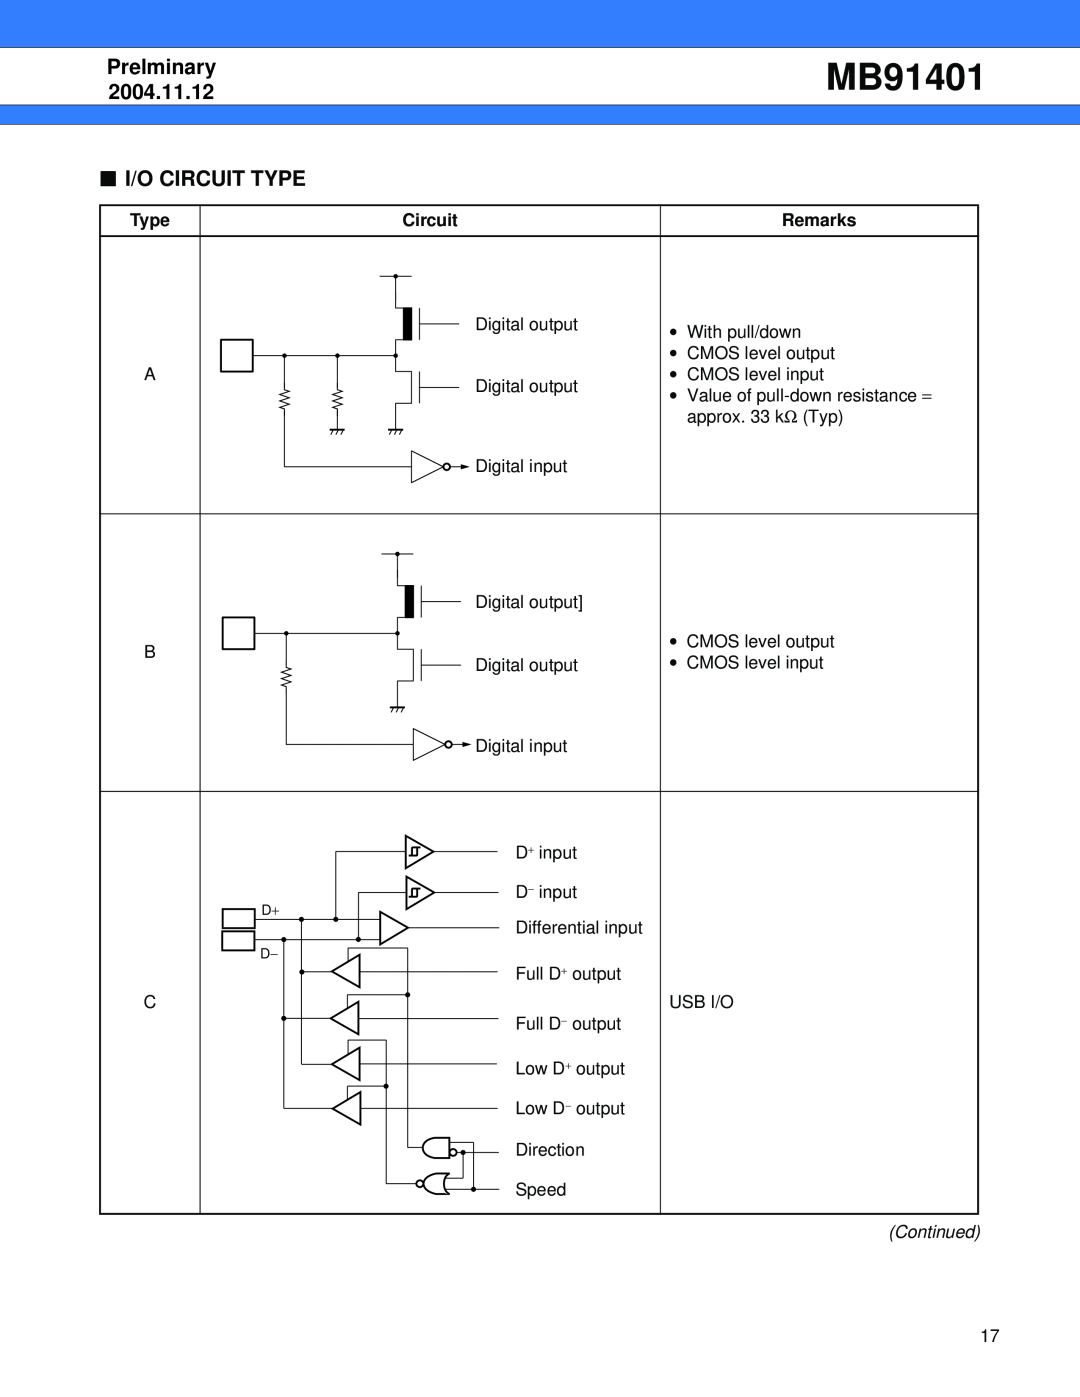 Fujitsu MB91401 manual I/O Circuit Type, Remarks, Prelminary, 2004.11.12 